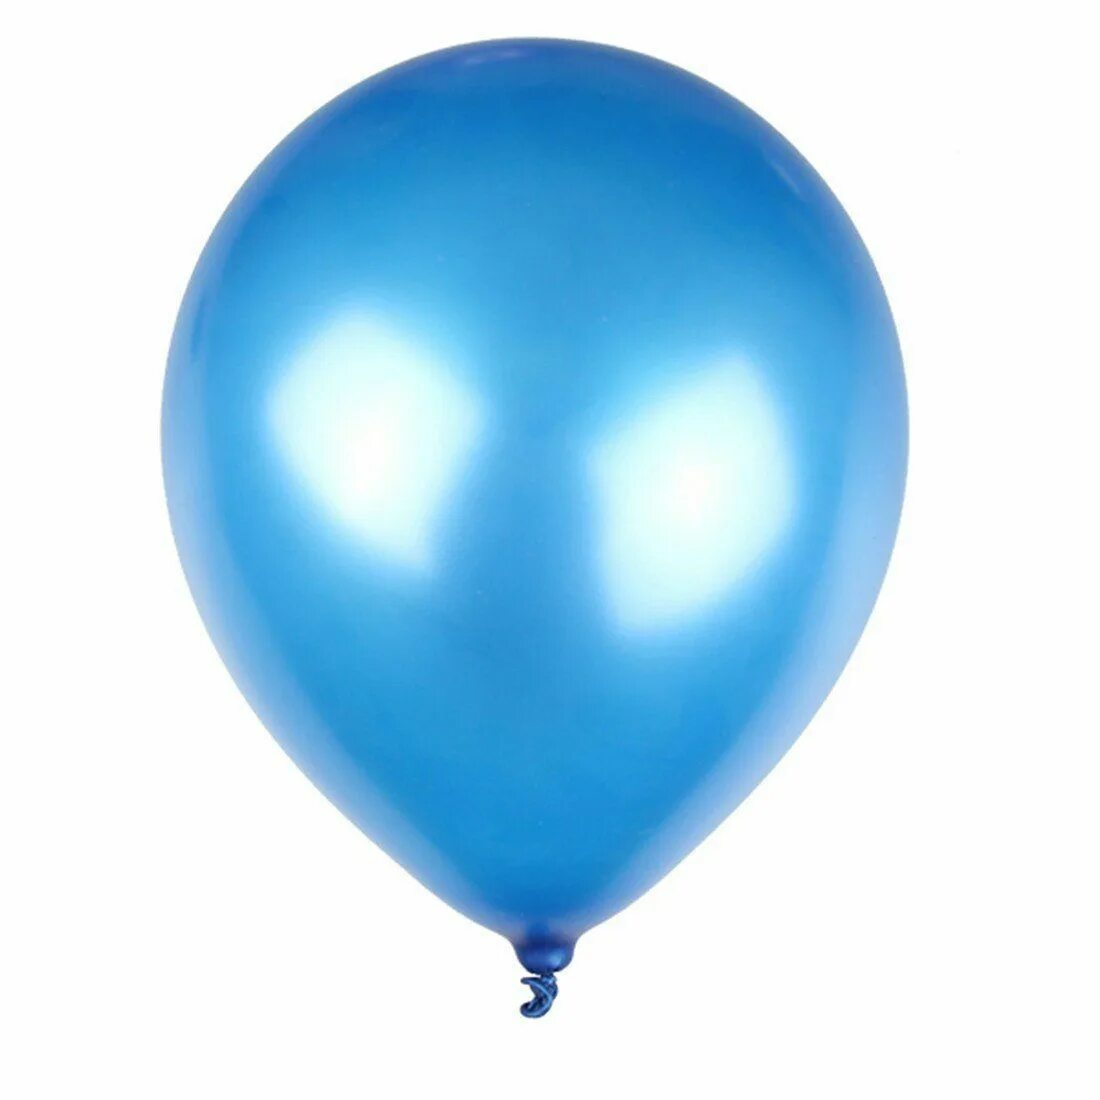 Синий шарик. Голубой воздушный шарик. Синий воздушный шар. Воздушный шарик синего цвета.